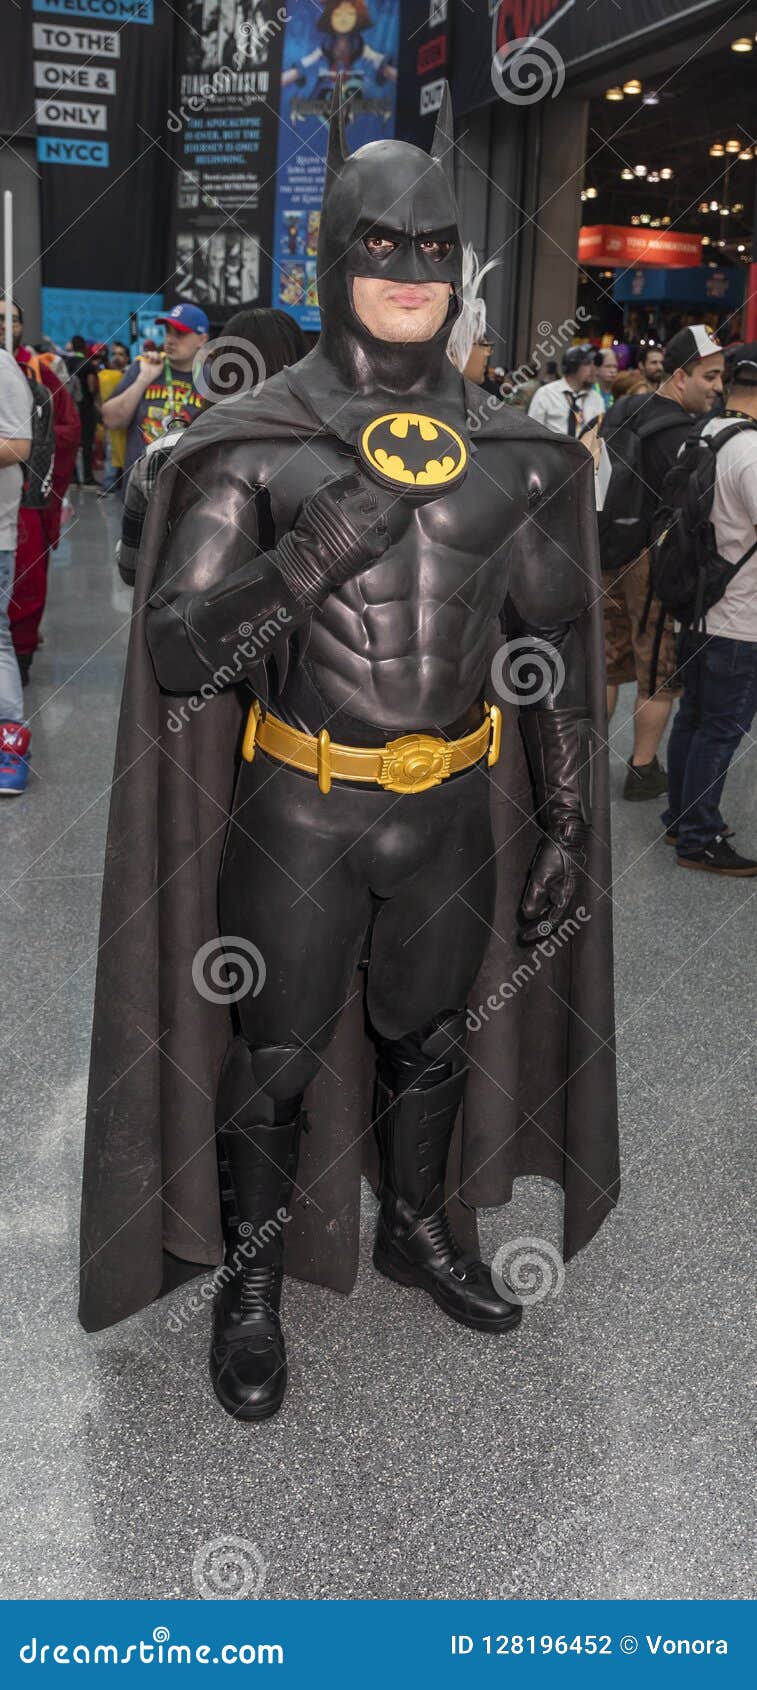 Batman Poses Stock Photos - Free & Royalty-Free Stock Photos from Dreamstime